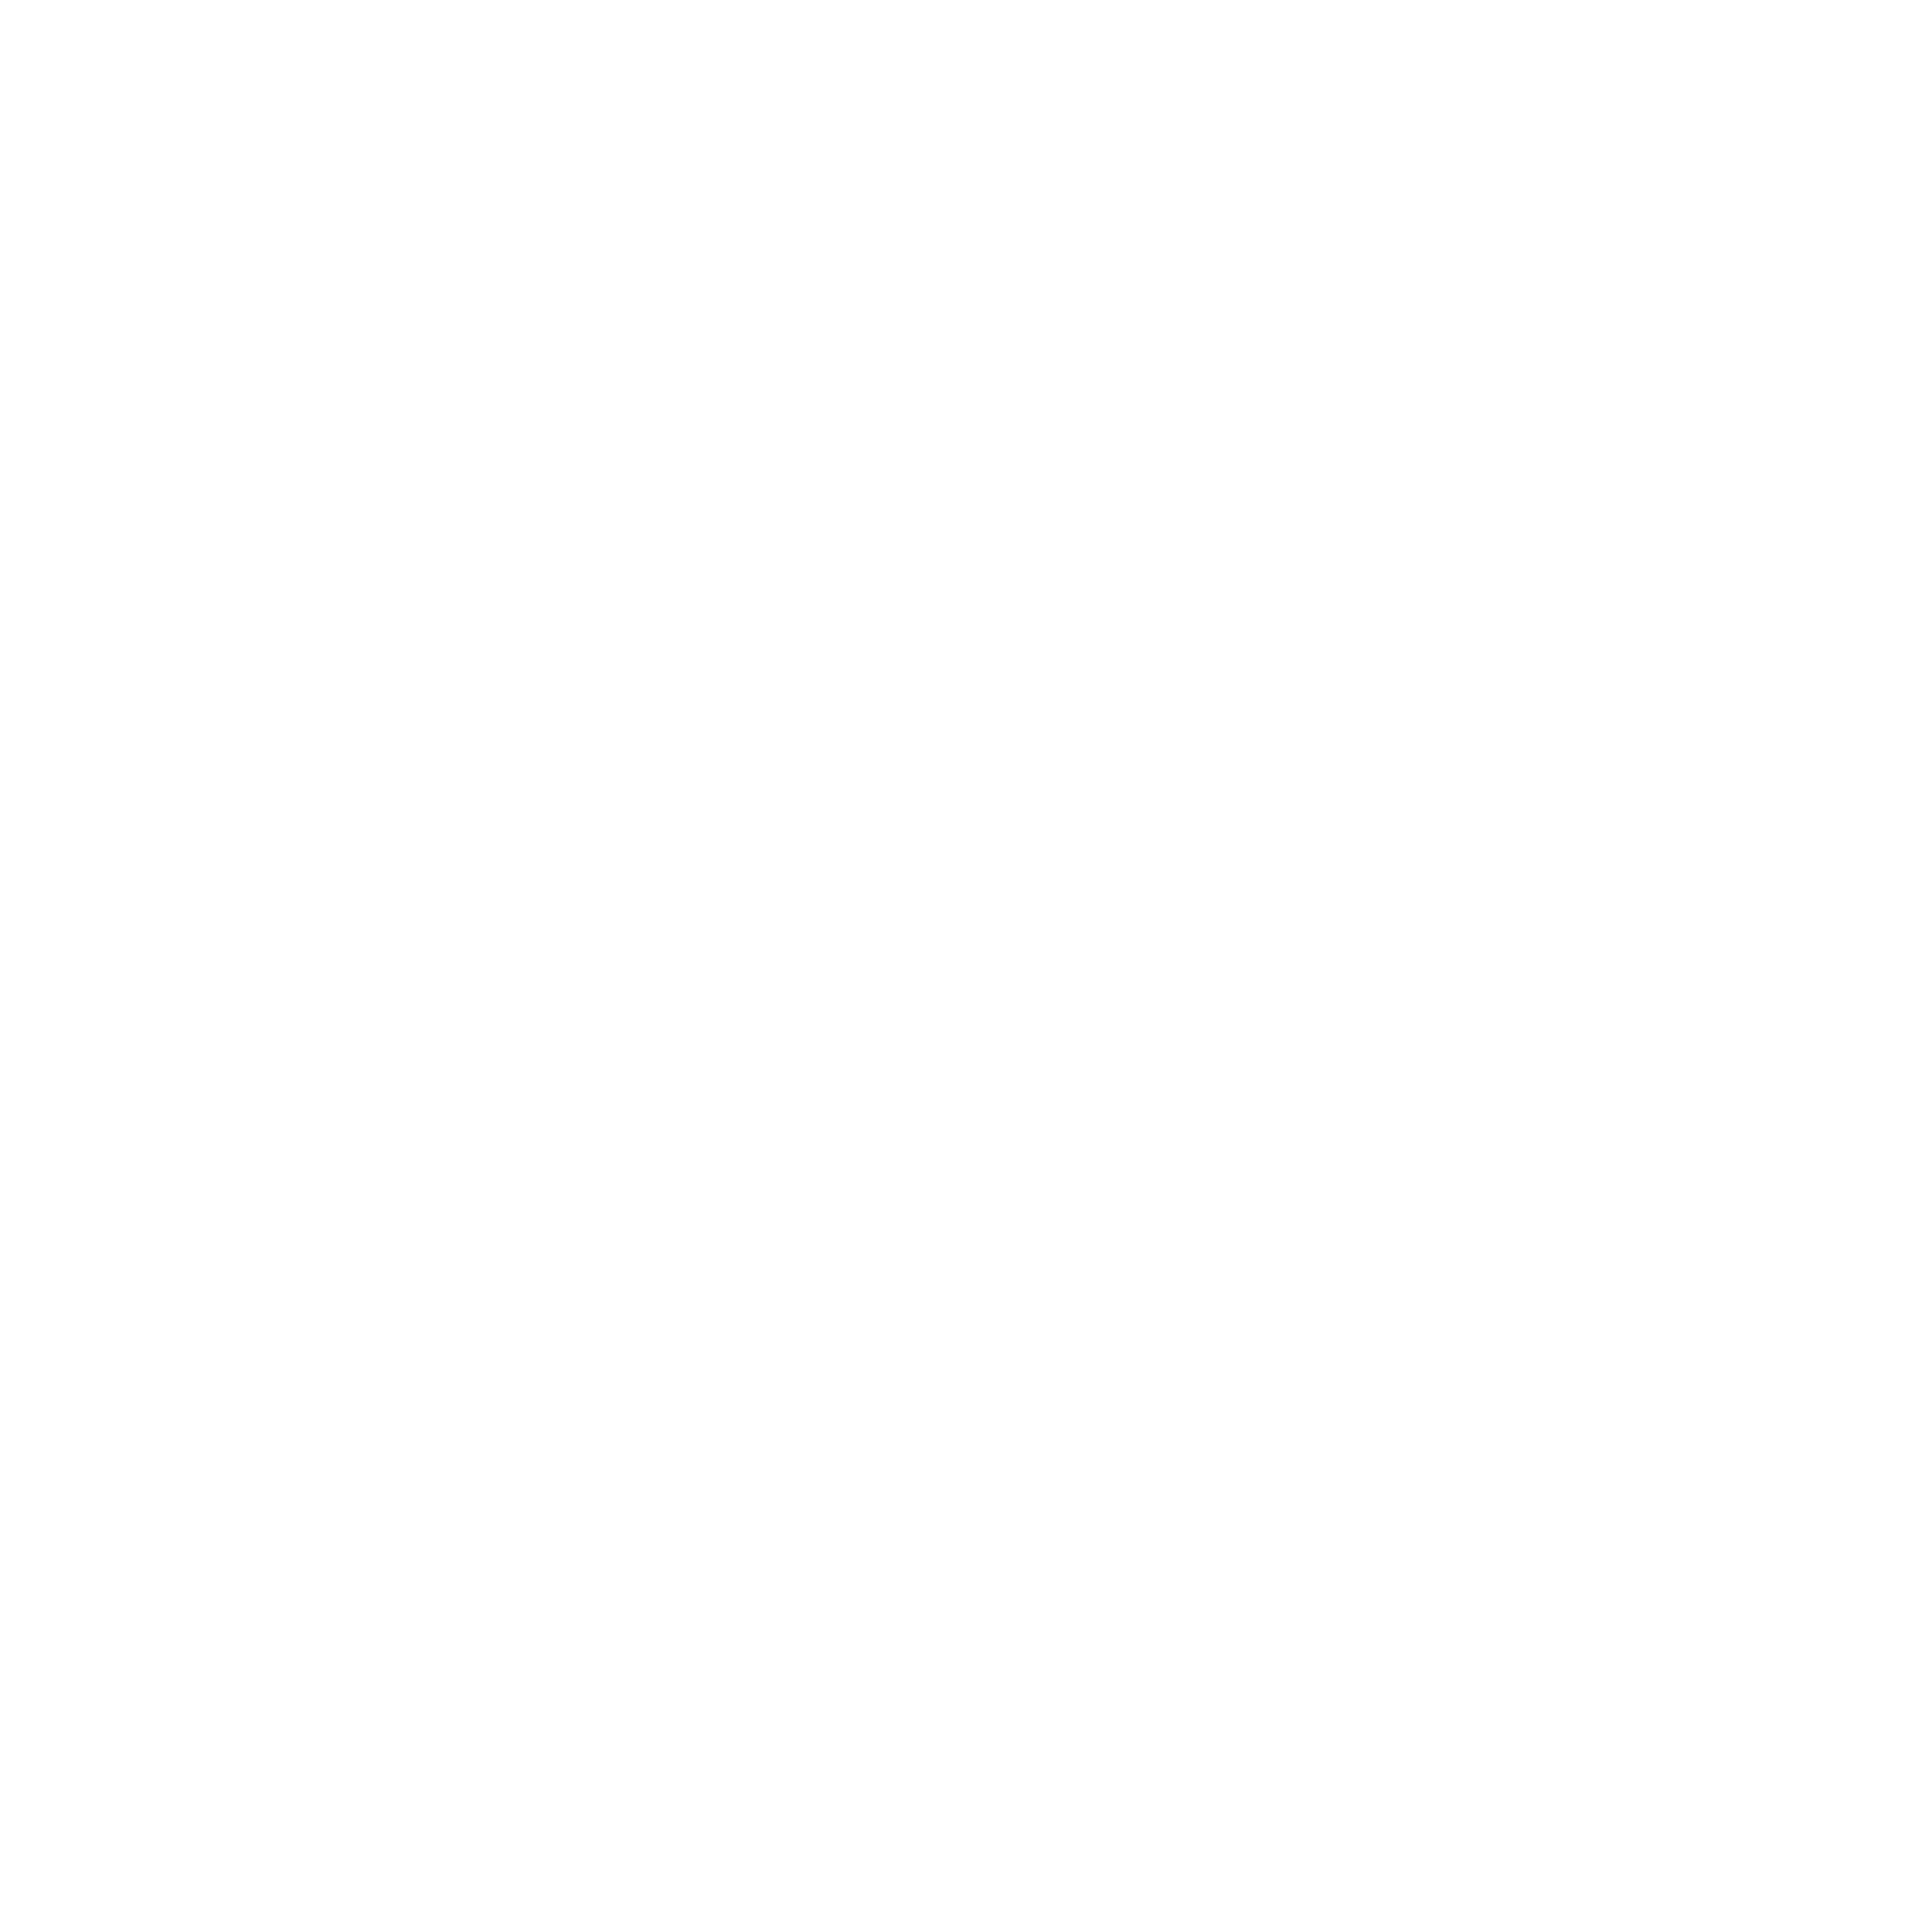 Alliance Key Biscayne Jiu-Jitsu Logo